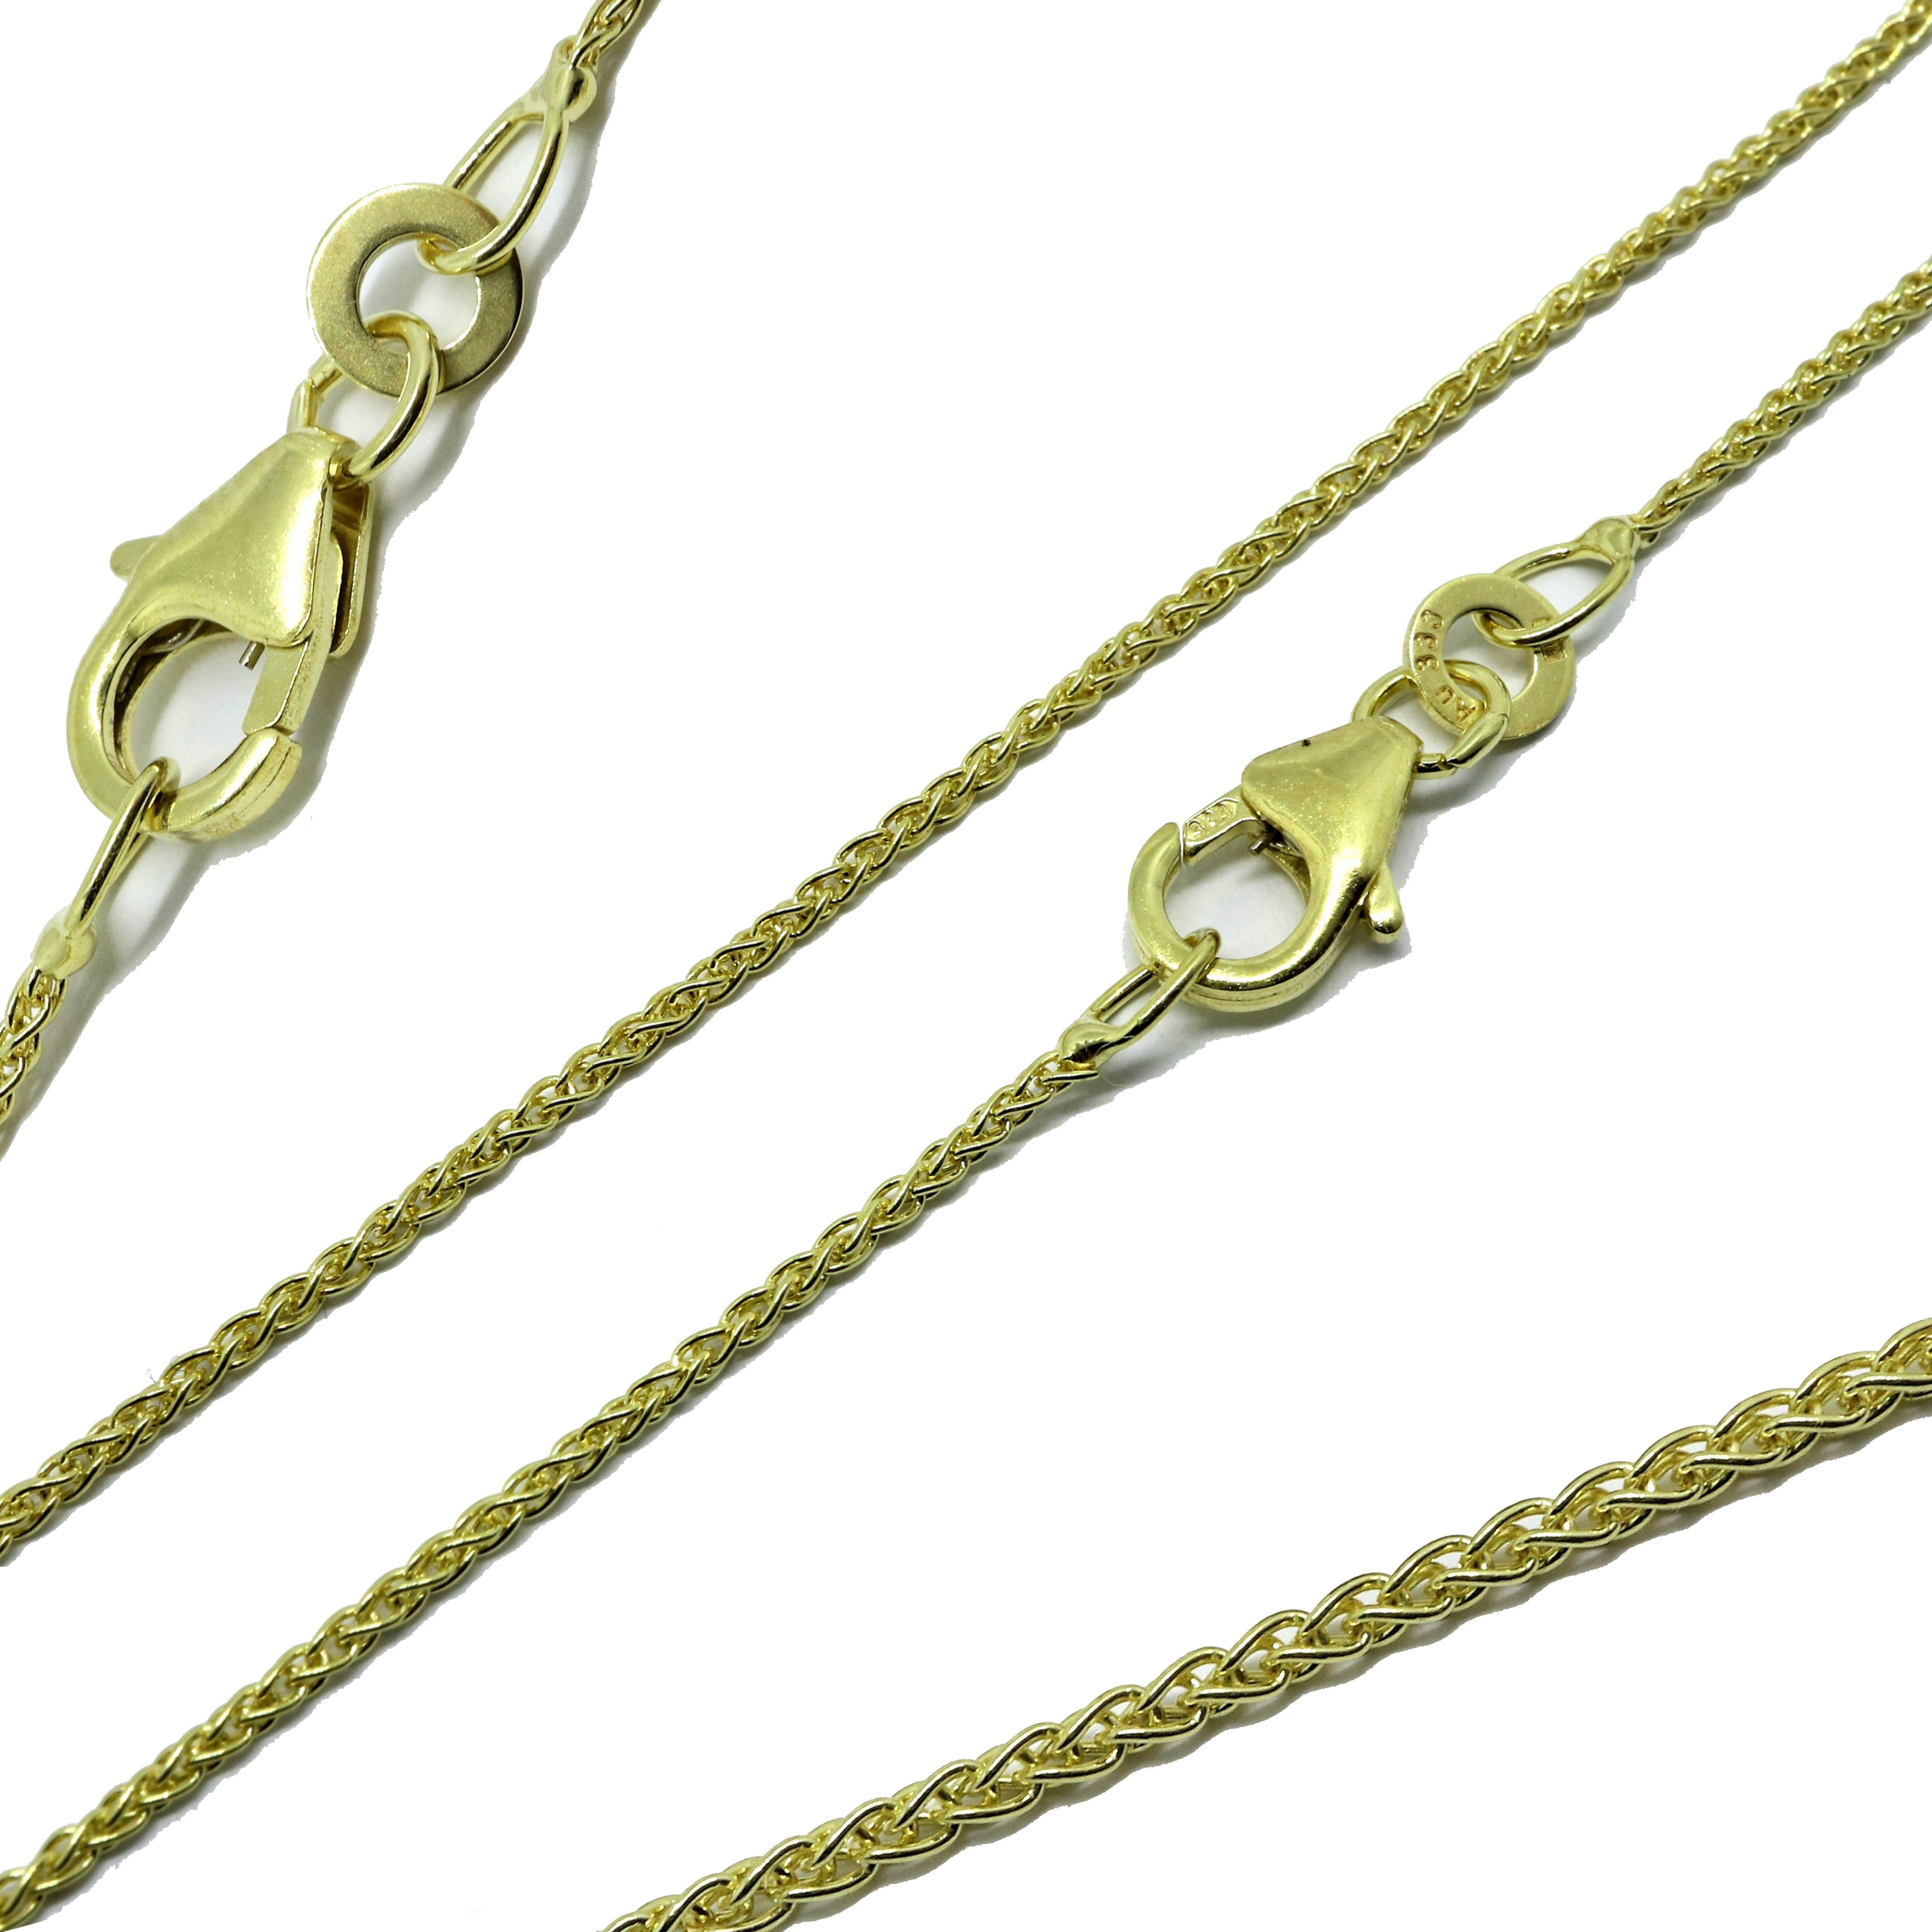 G & J Collier Zopfkette 333 8Karat Gold 1,10mm 45cm hochwertige edle Halskette, Made in Germany